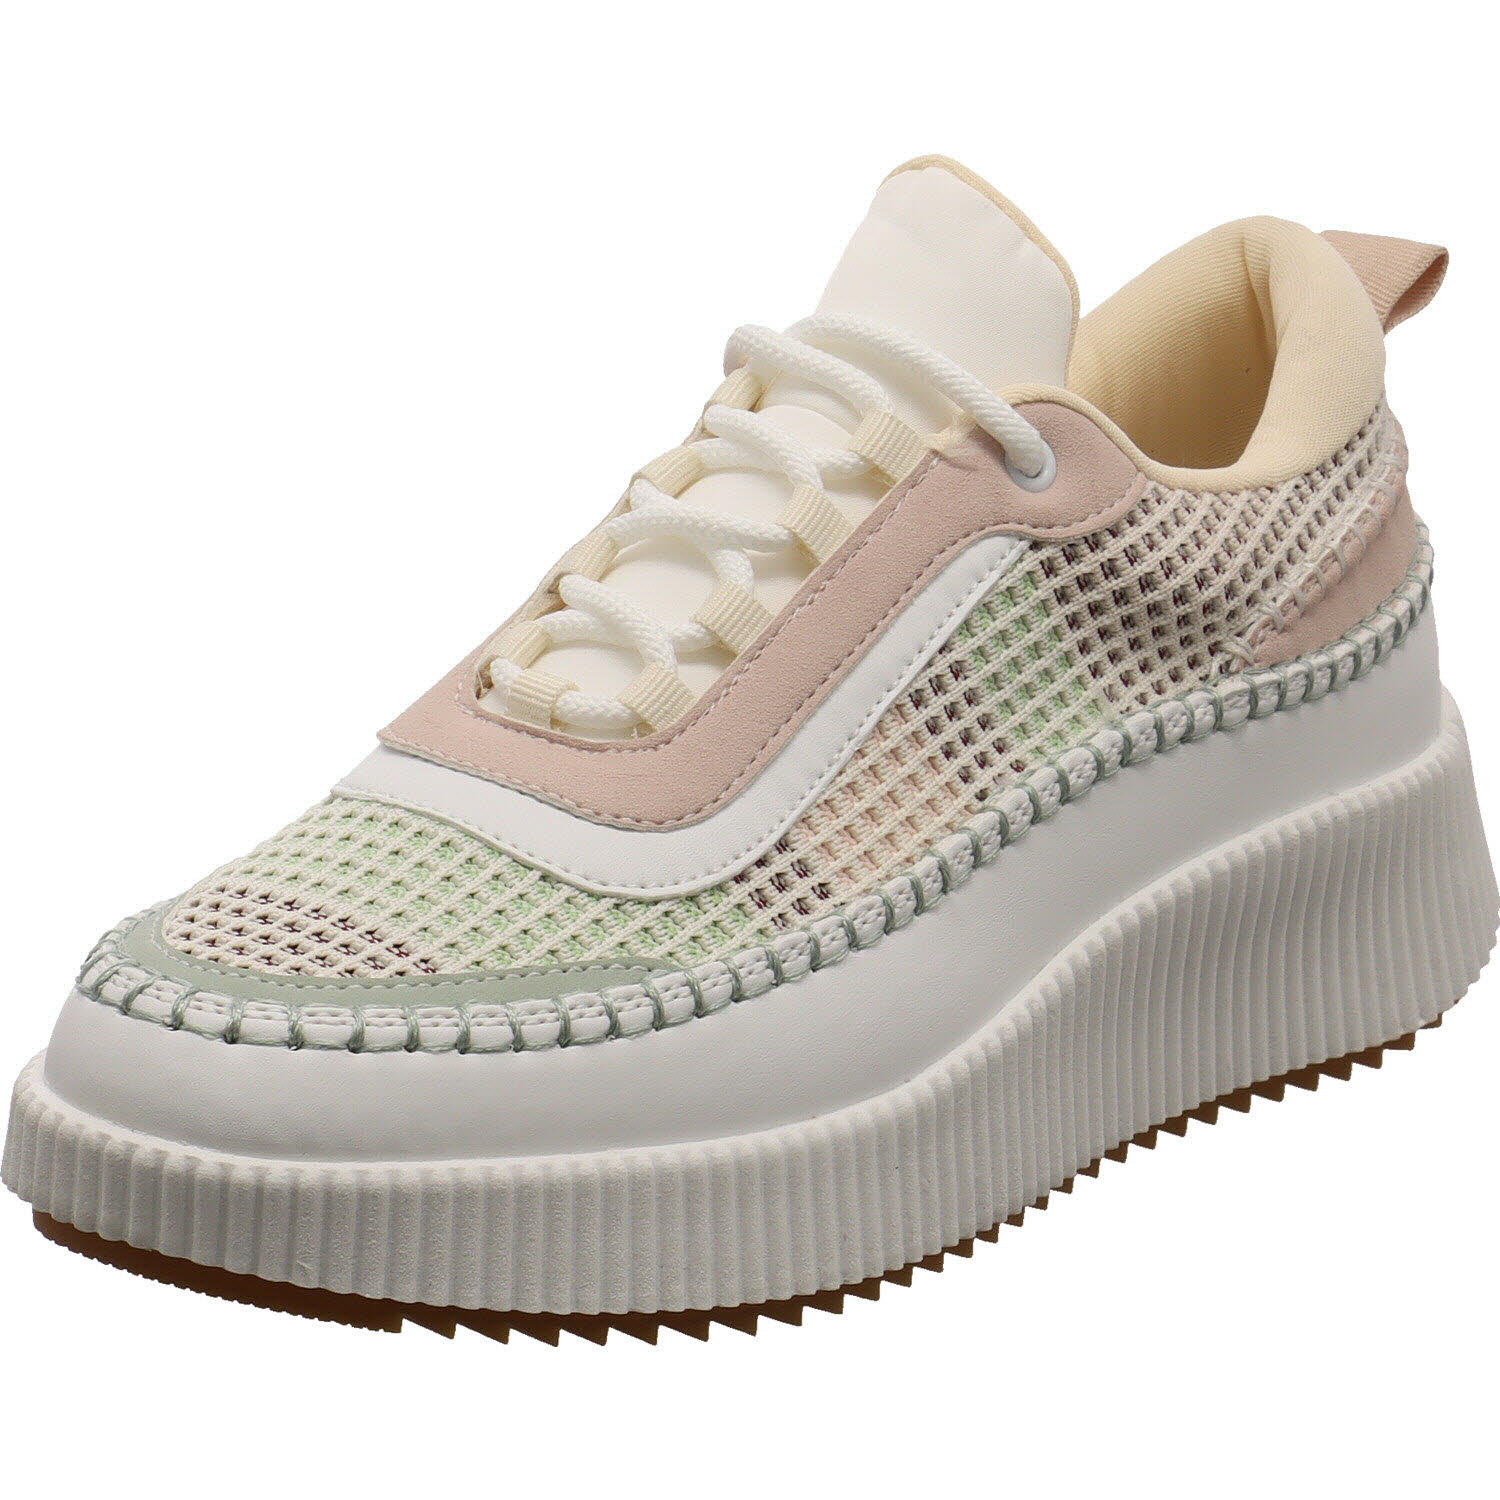 La Strada Sneaker low Weiß/rosa/grün für Damen